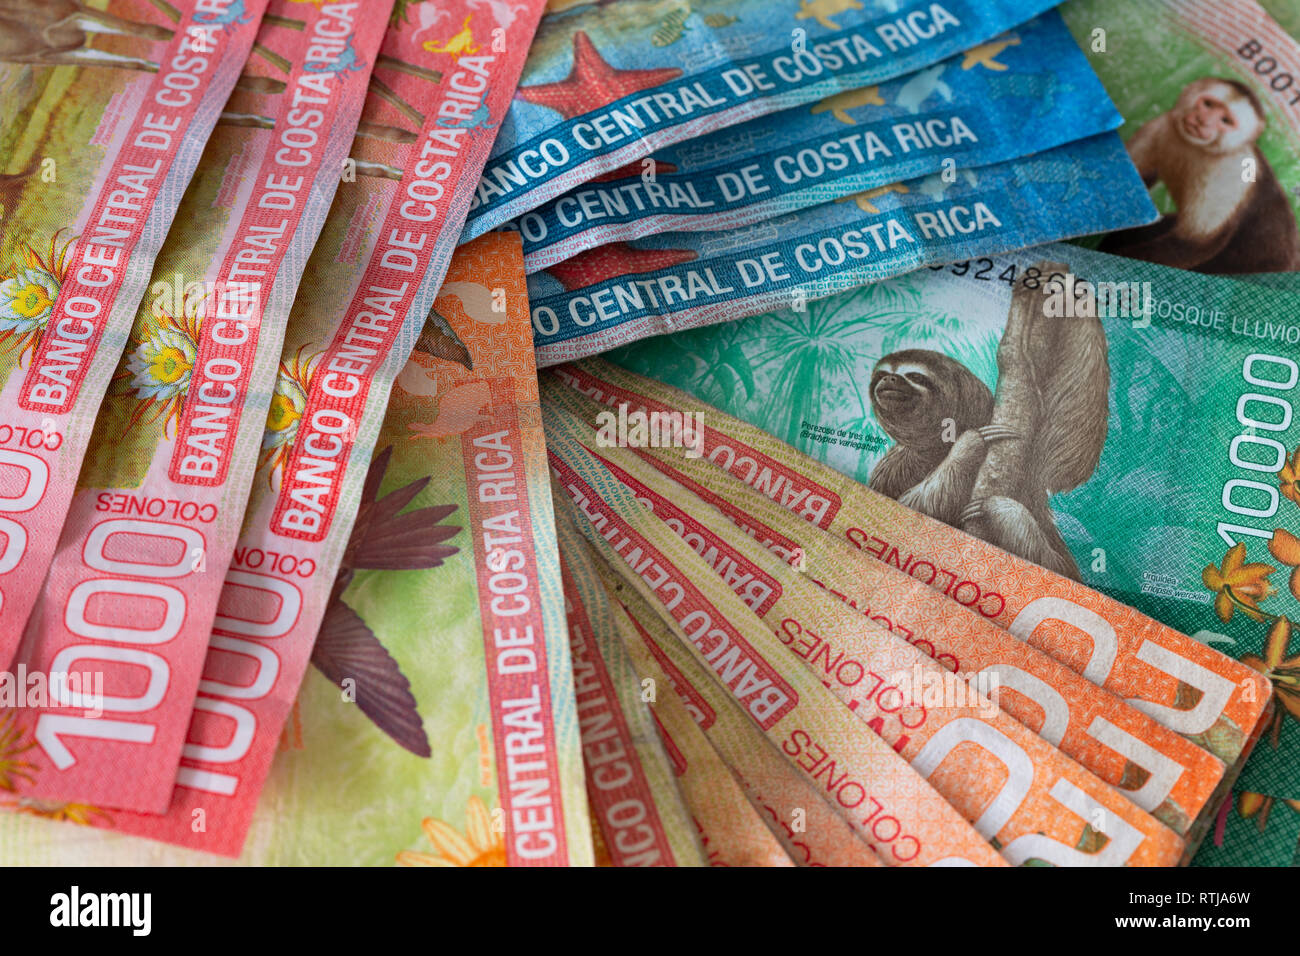 Money from Costa rica / Colones Stock Photo